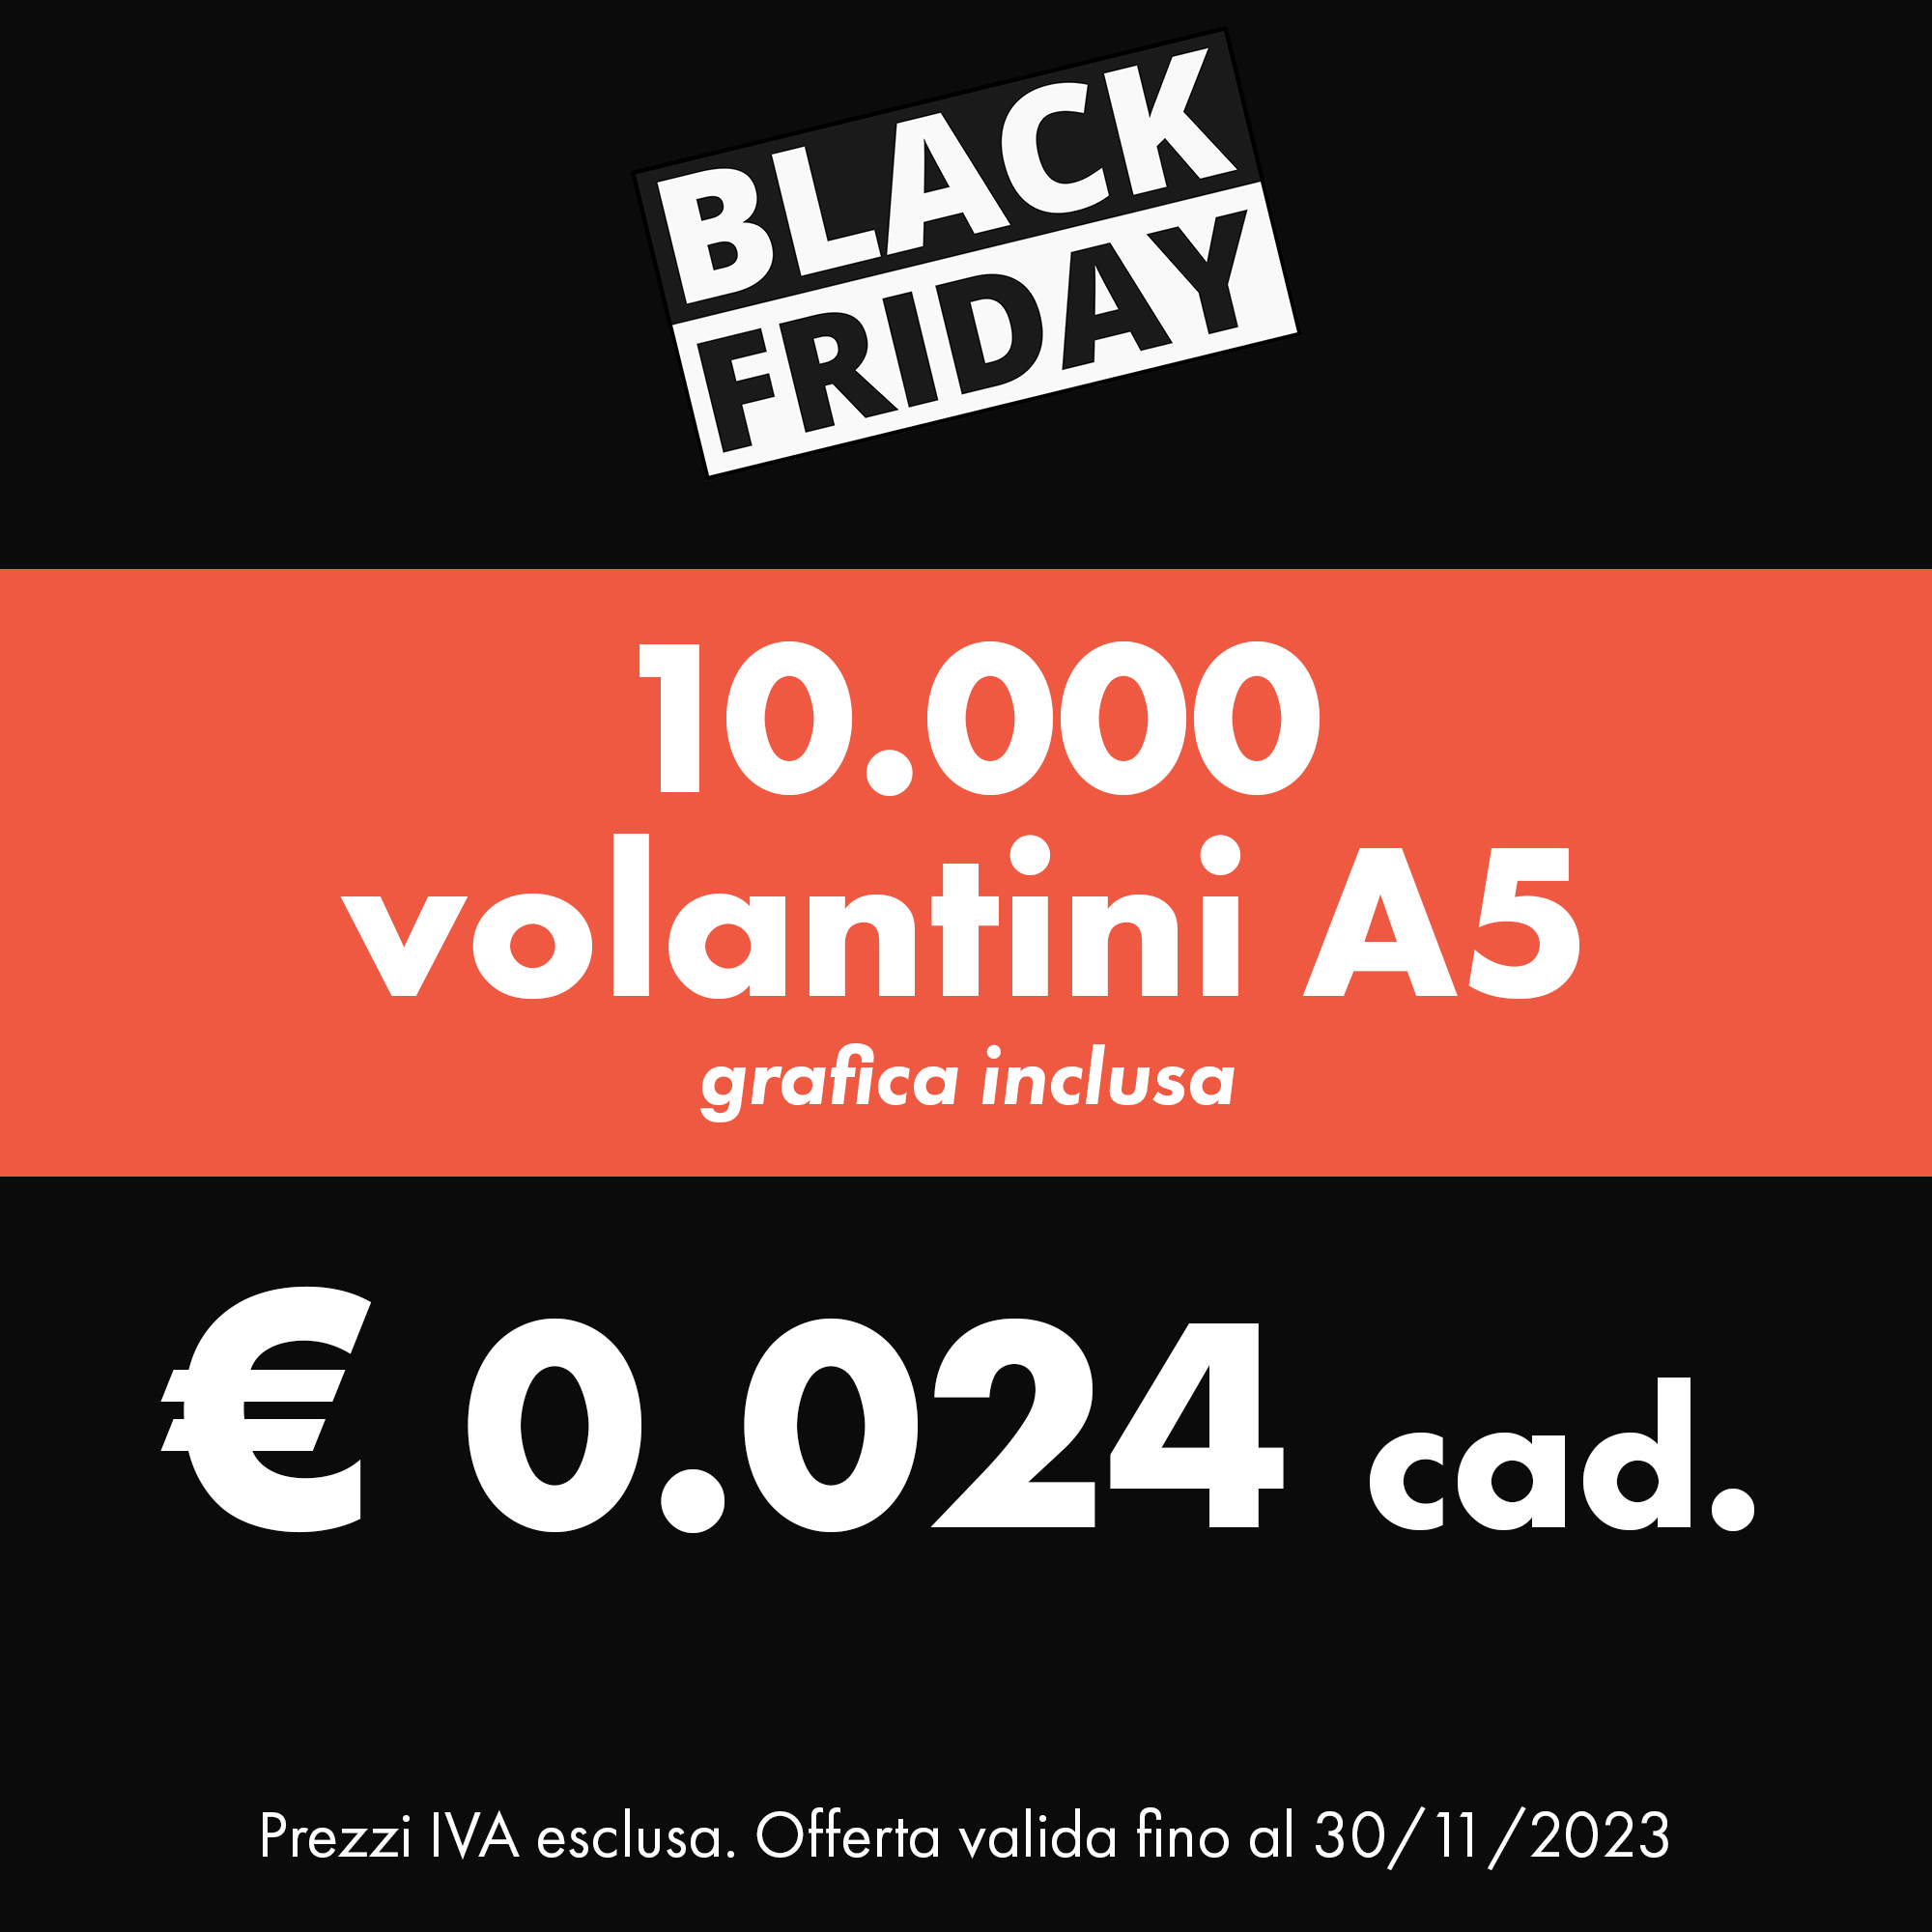 Black Friday Stampa Volantini A5 | ARG